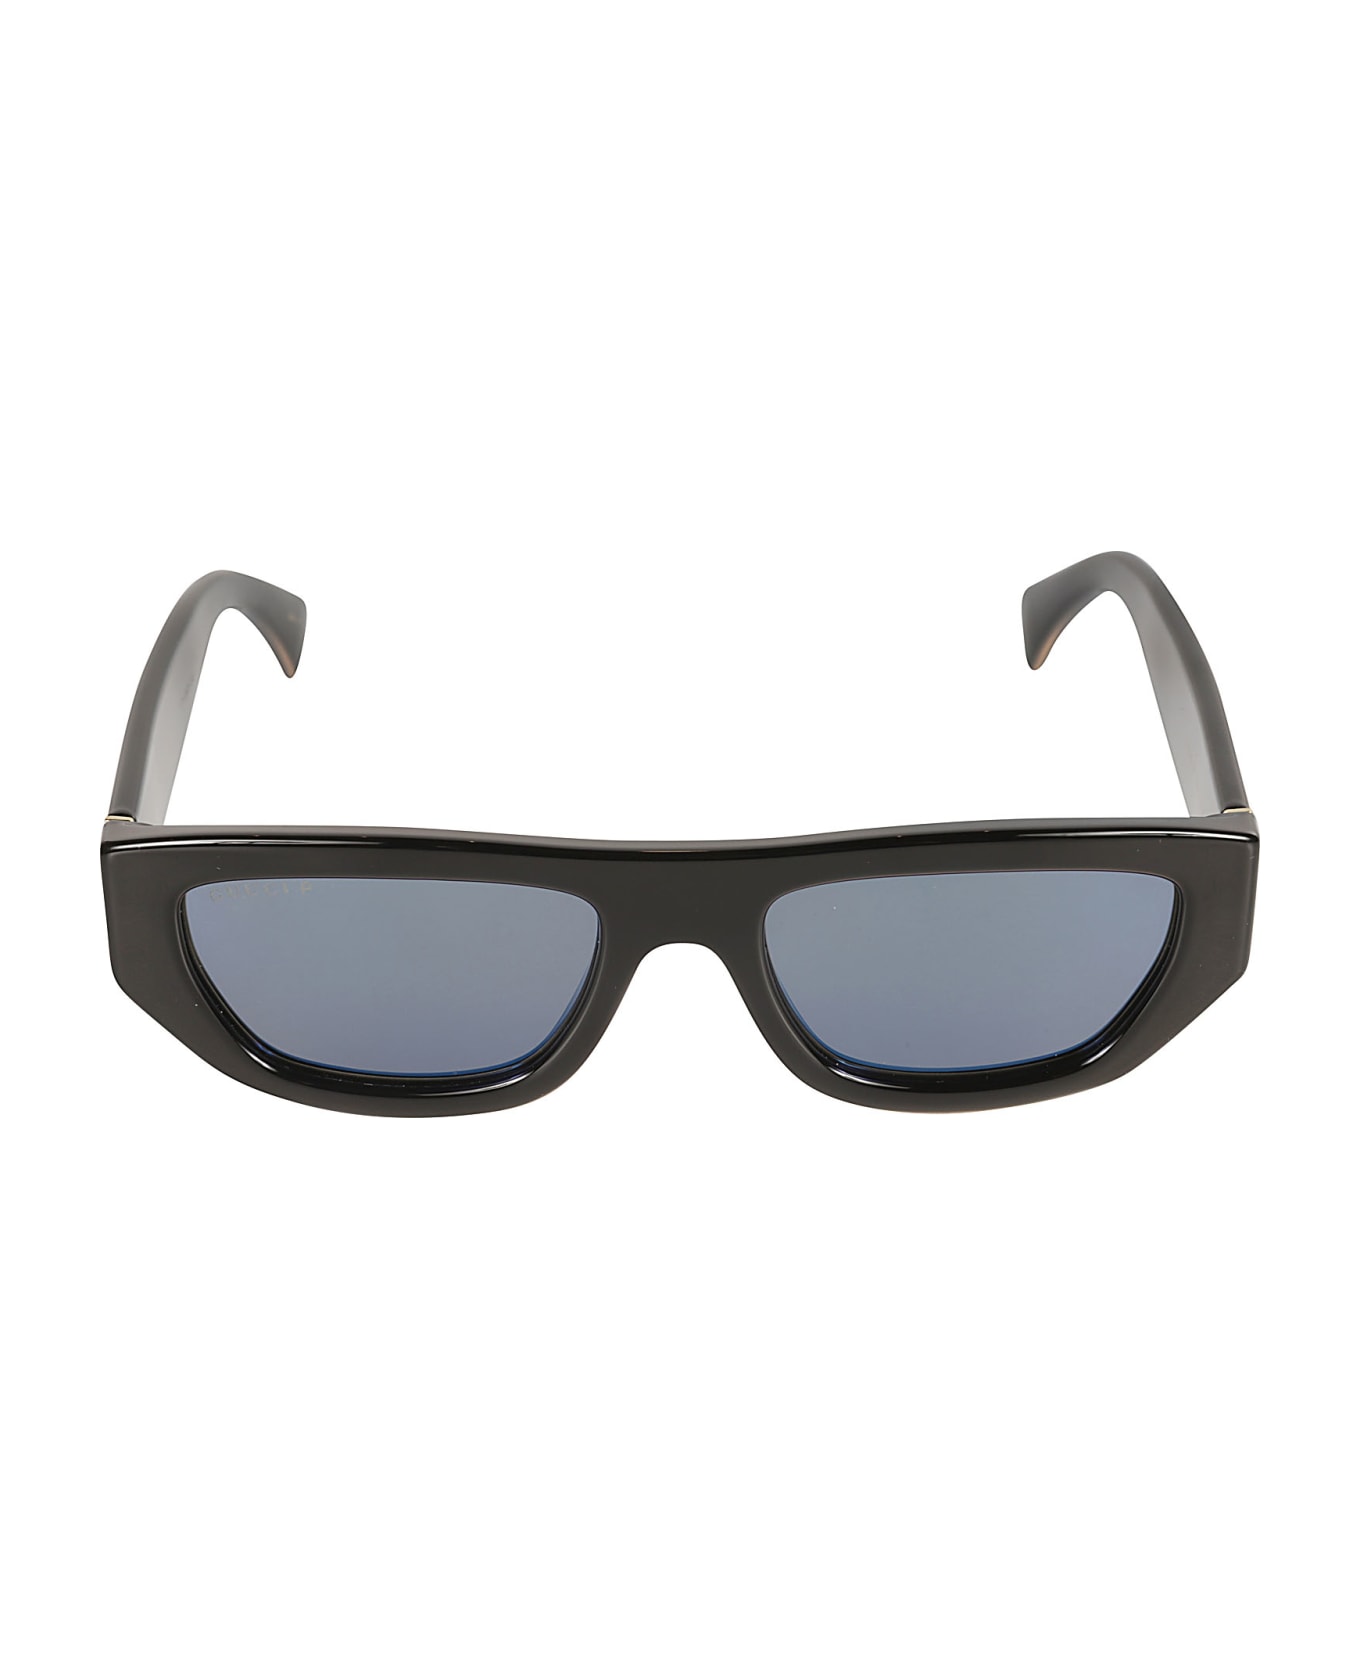 Gucci Eyewear Rectangular Frame Logo Sided Sunglasses - Black/Blue